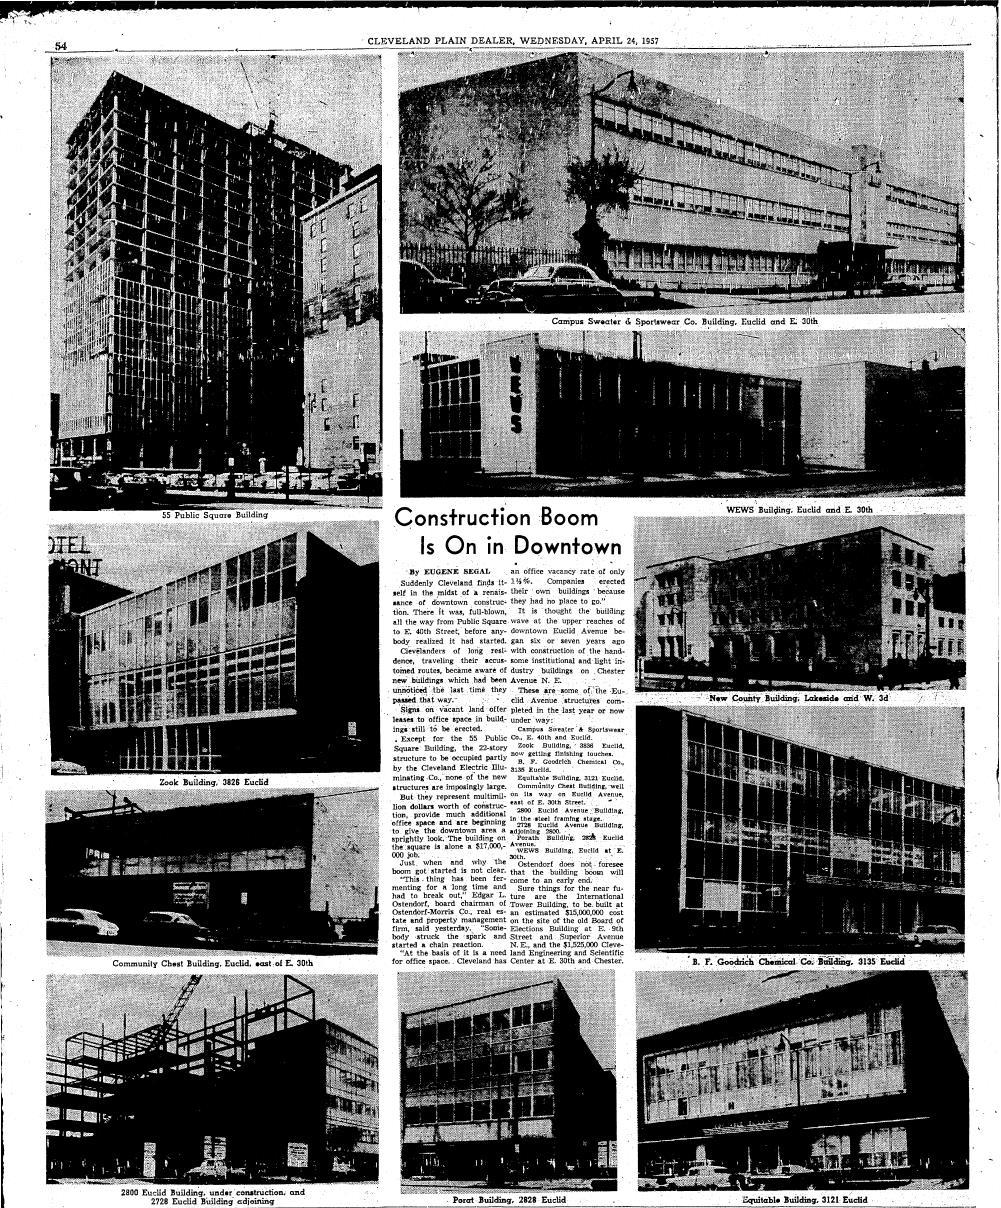 Construction Boom Downtown & Euclid Ave. - 1957 55 Public Square Building Campus Sweater & Sportswear Co. Building. E. 40 th & Euclid WEWS Building, E.